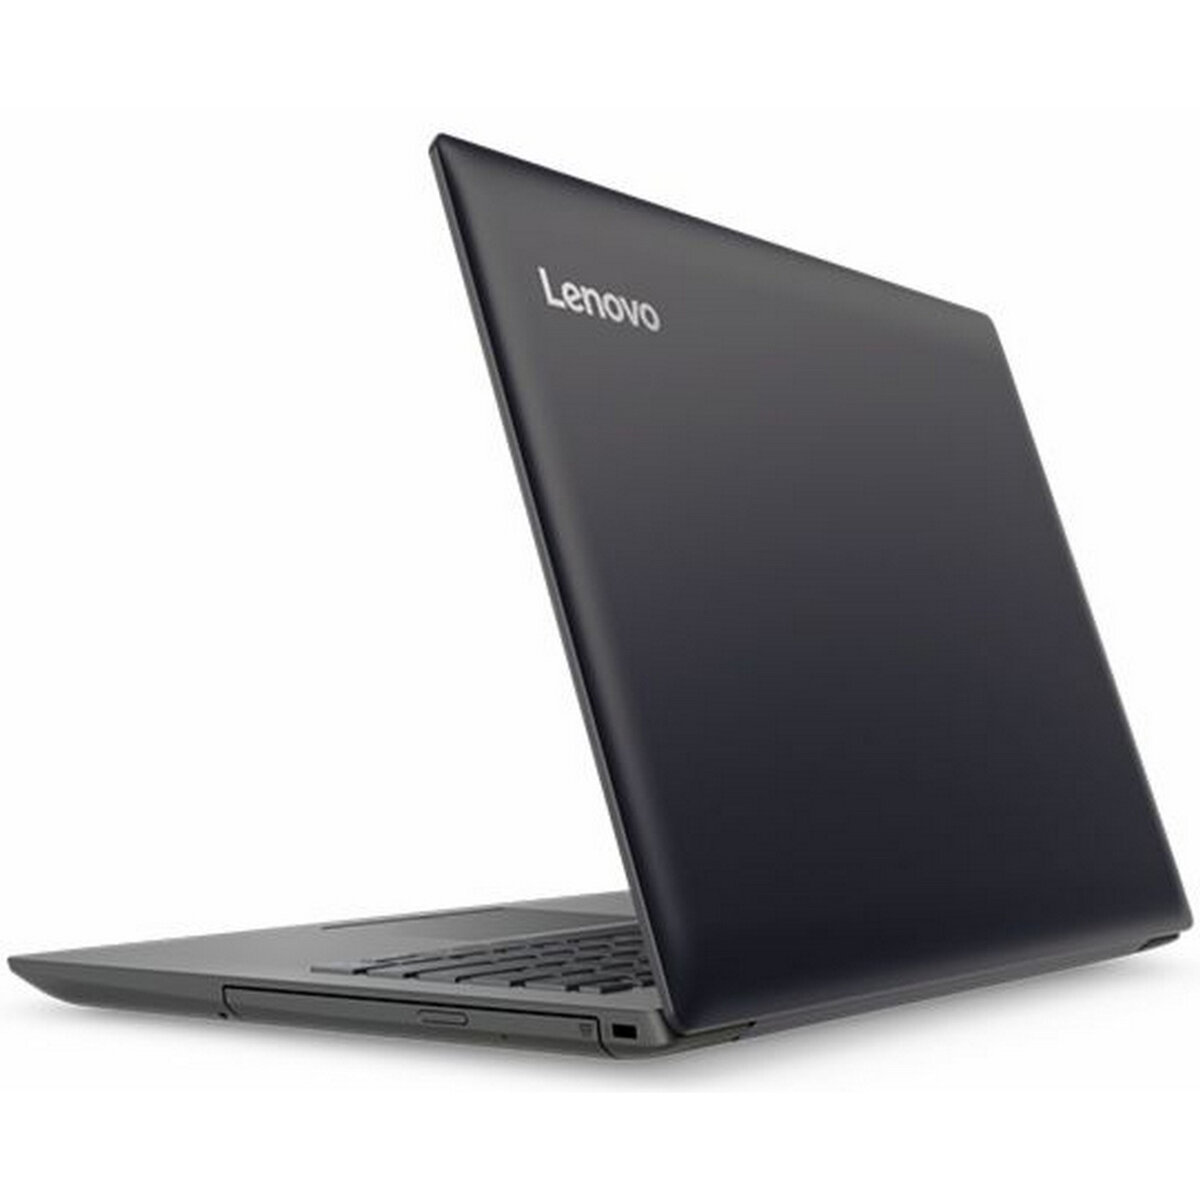 Laptop Lenovo Ideapad 320 14ISK i3 mua ở đâu tốt?